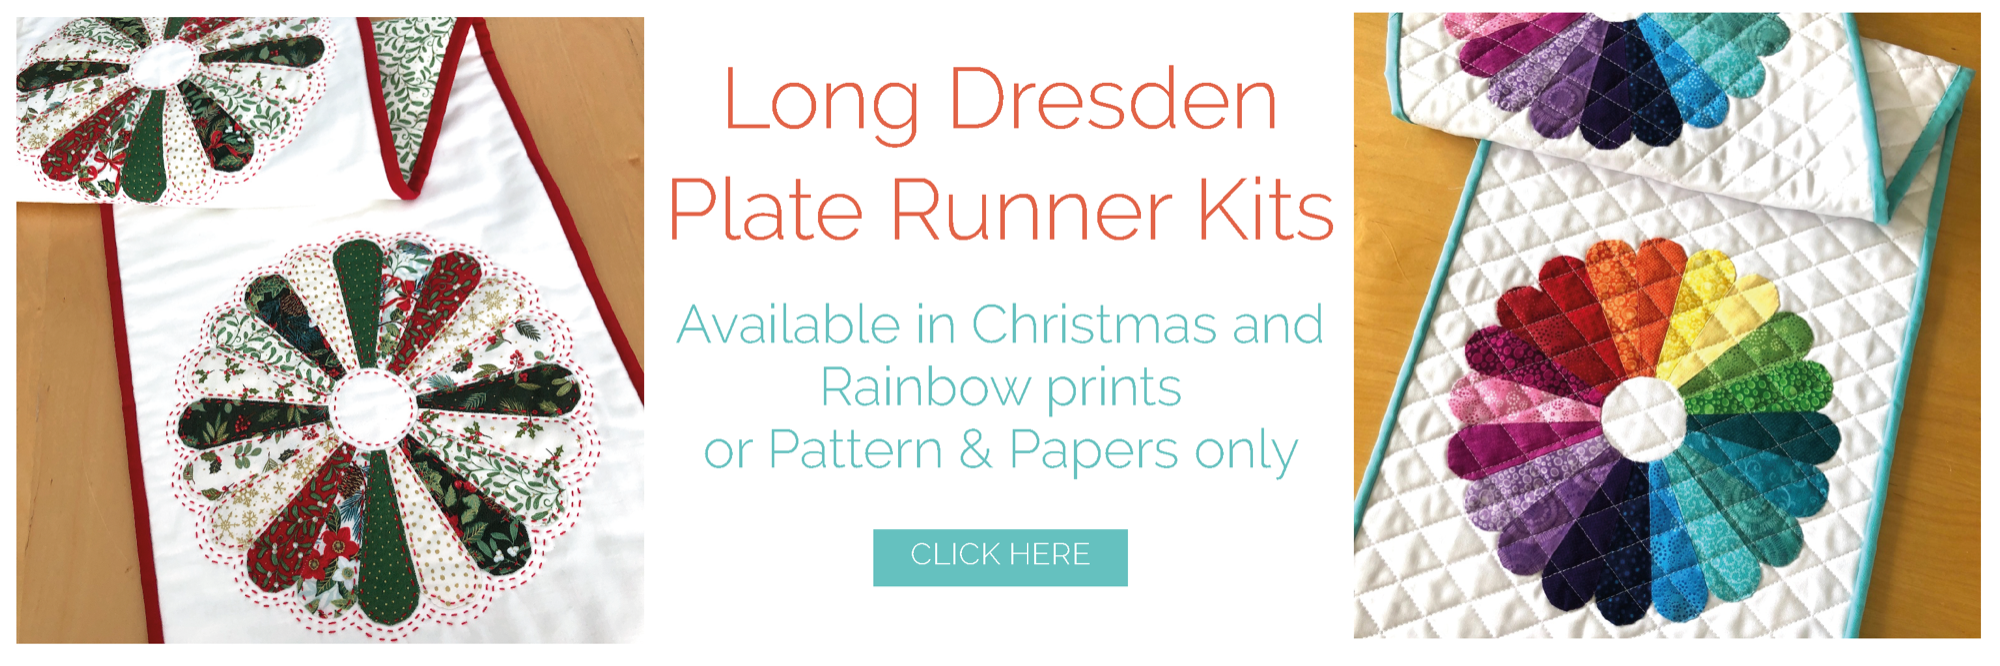 Long Dresdent Plate kits